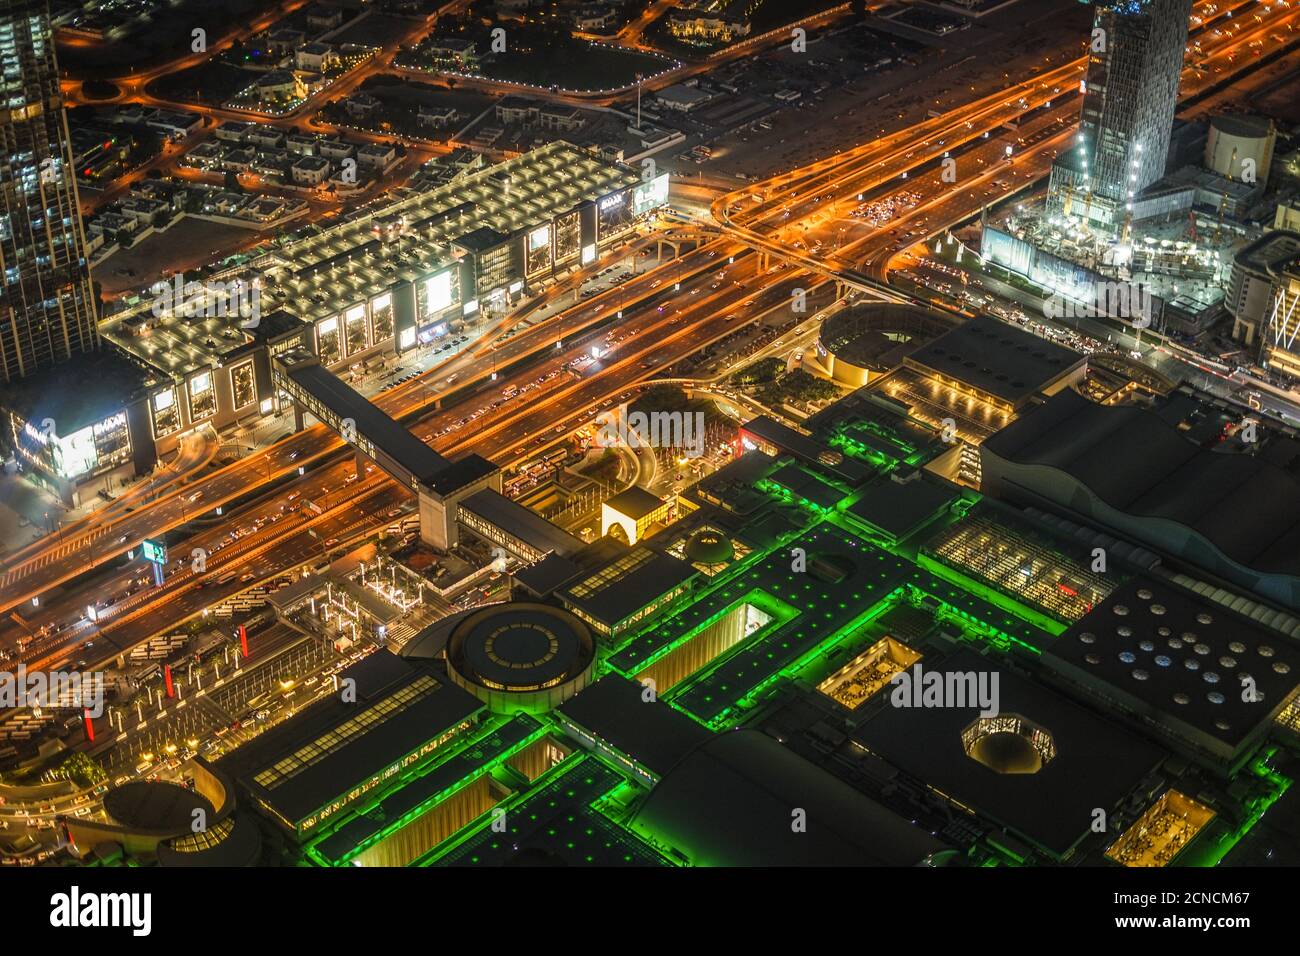 Dubai night view seen from the observation deck of Burj Khalifa Stock Photo